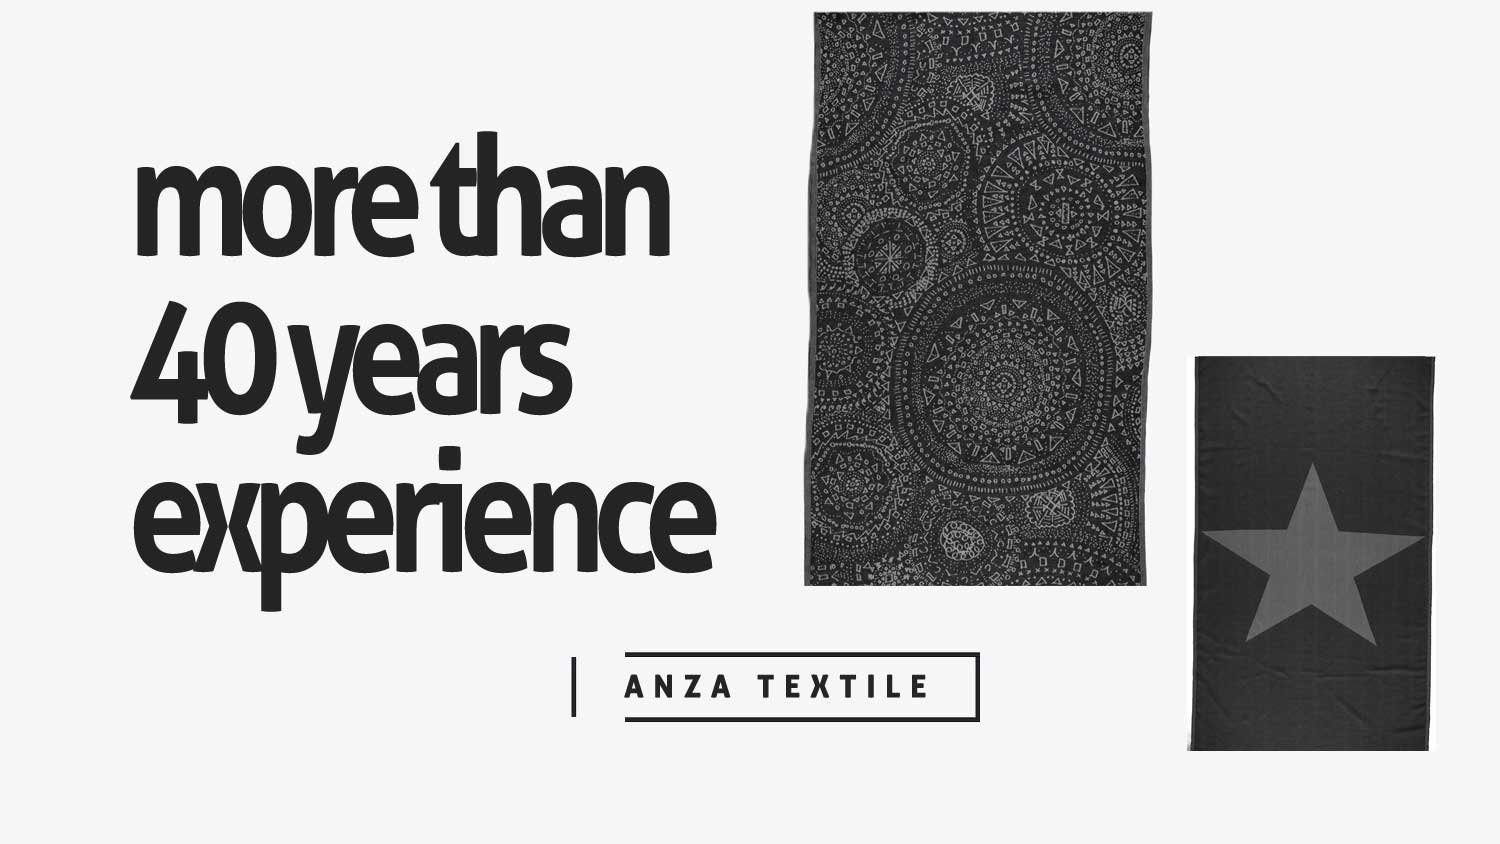 anza textile company - Turkish Towel Manufacturer - Wholesale 